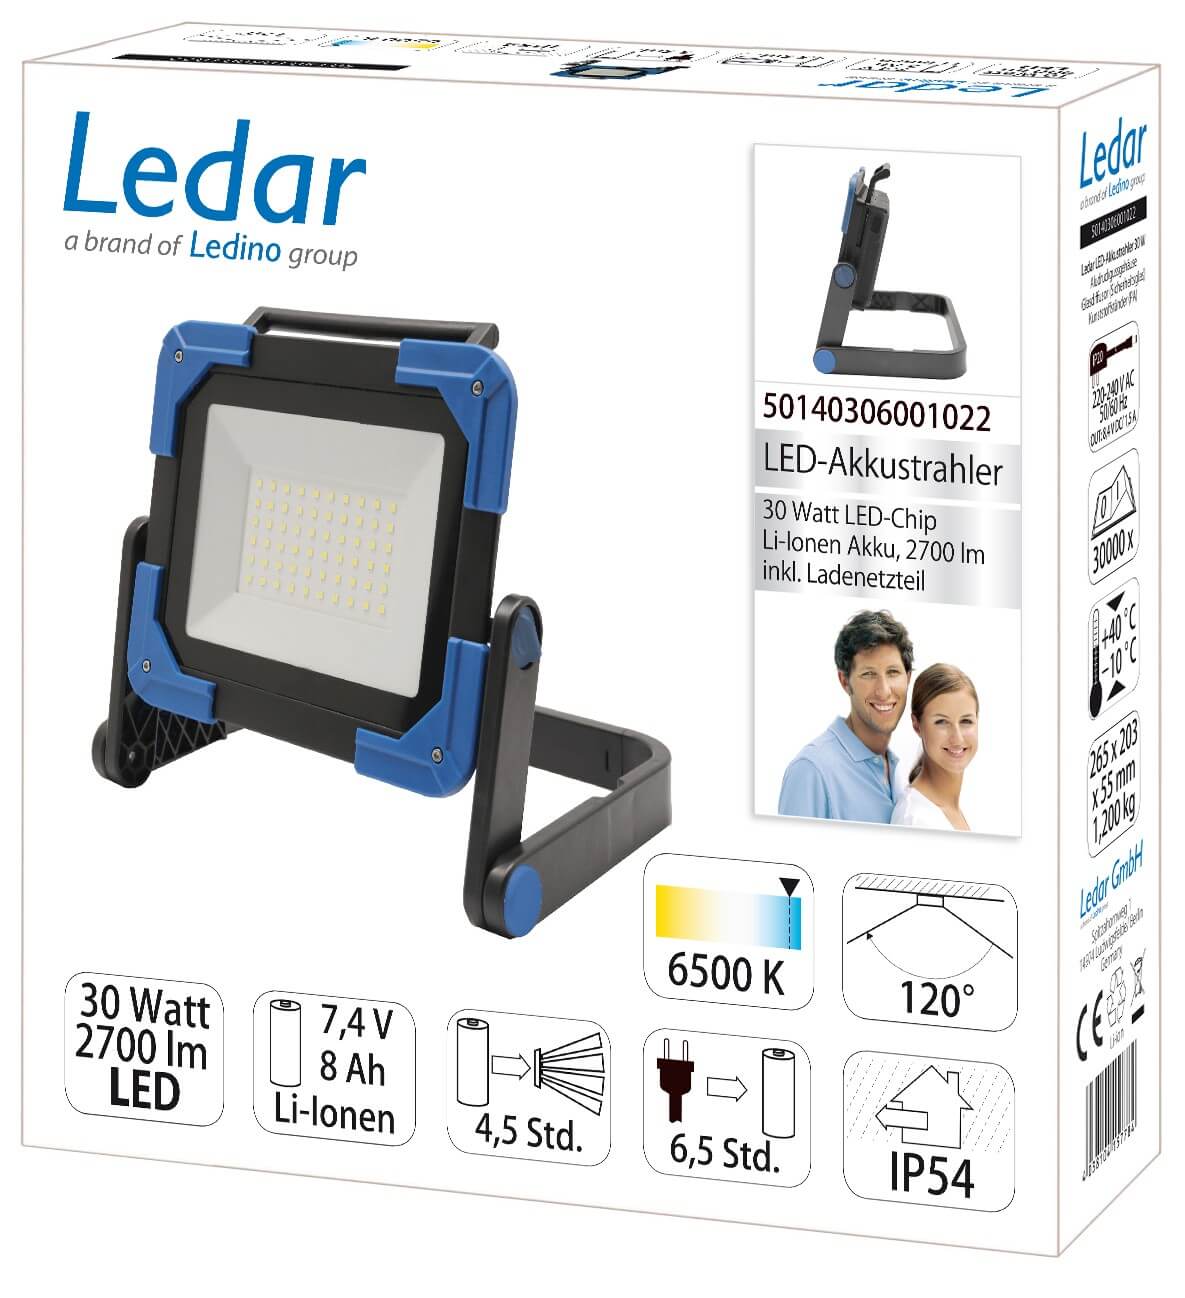 Ledar LED-Akkustrahler 30W mobile Beleuchtung 3000lm, Li-Ionen-Akku  7,4V/8Ah für Bau, Renovierung,